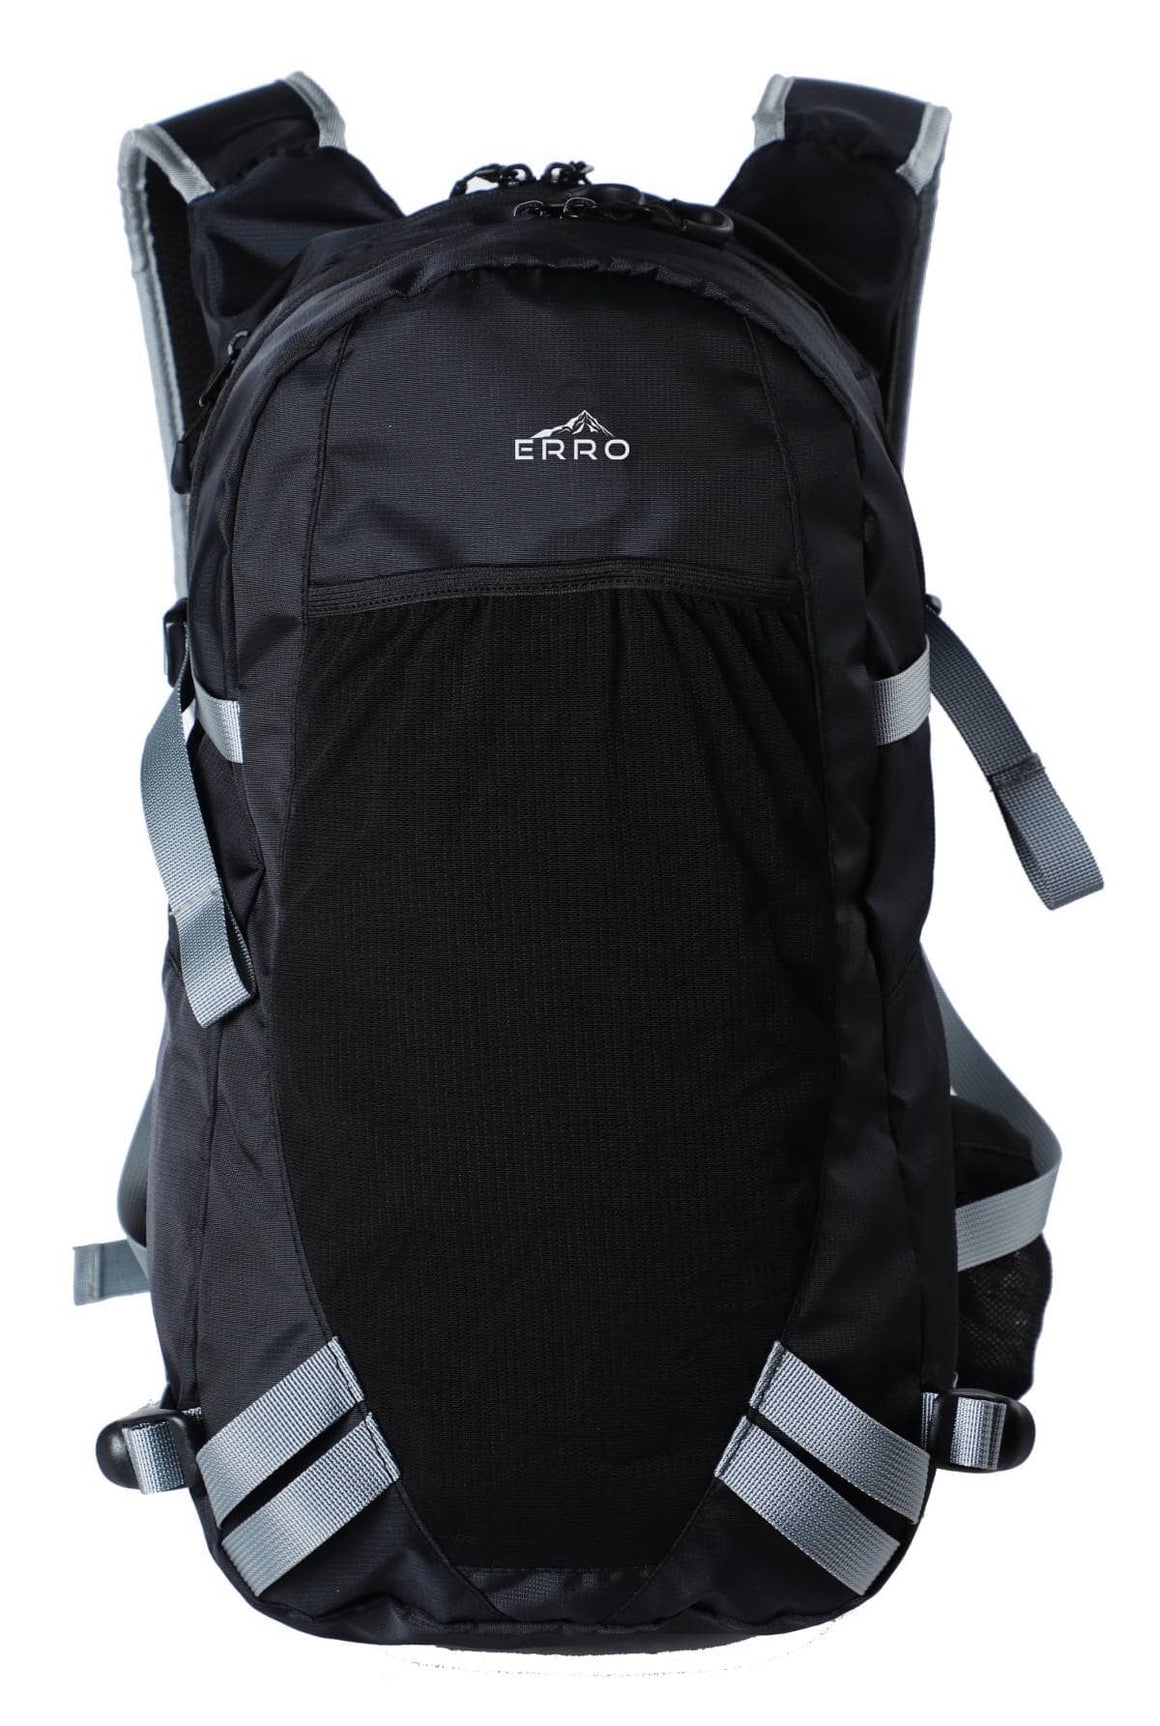 ERRO Cycling - Hiking Backpack - 13L Capacity - Cycle Touring Life